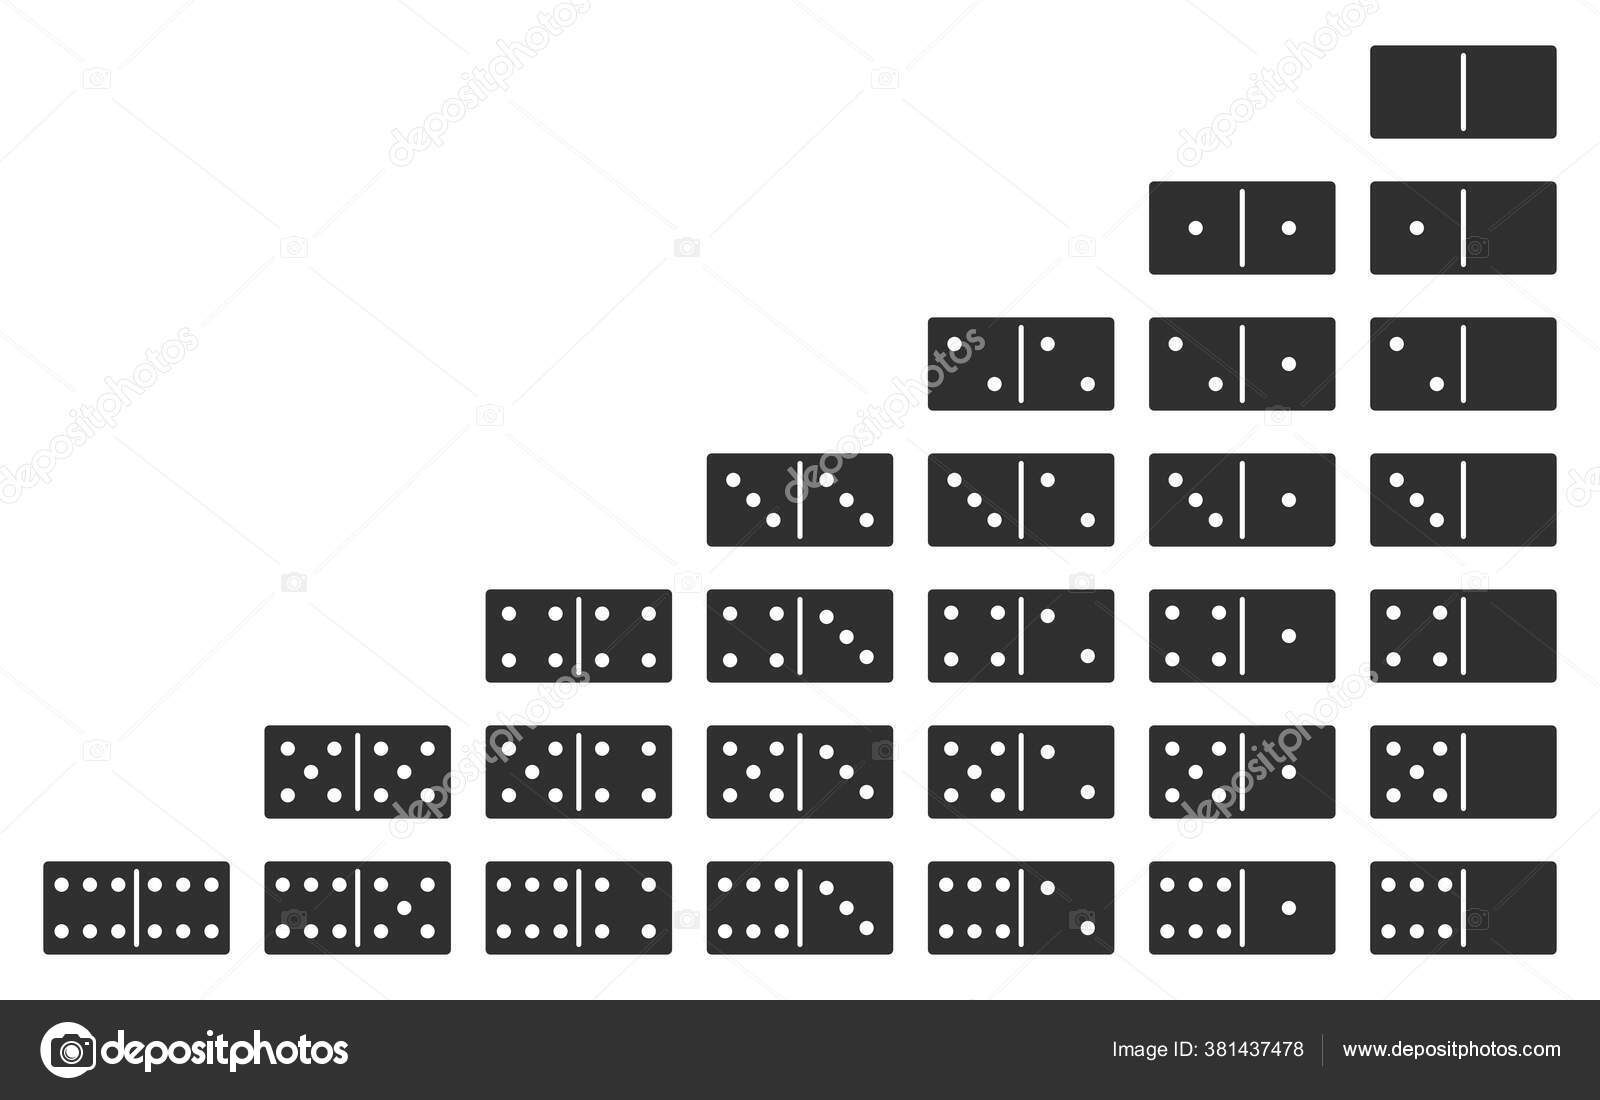 Jogo de dominó no fundo branco